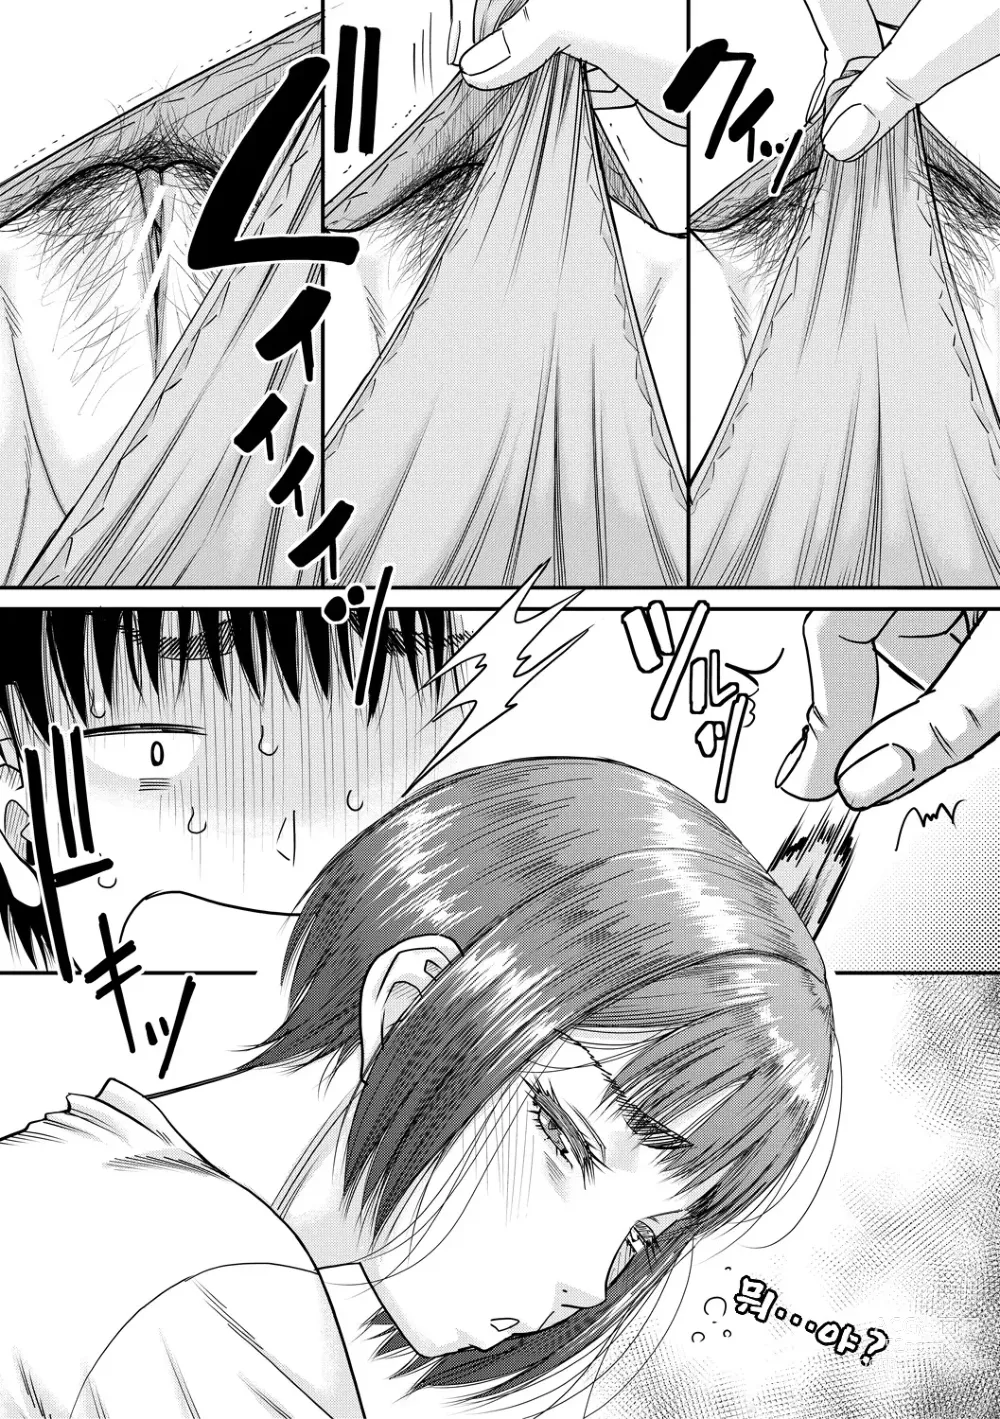 Page 11 of manga Boku to Okaa-san no Himitsu no Kankei l 나와 의붓 엄마의 비밀 관계